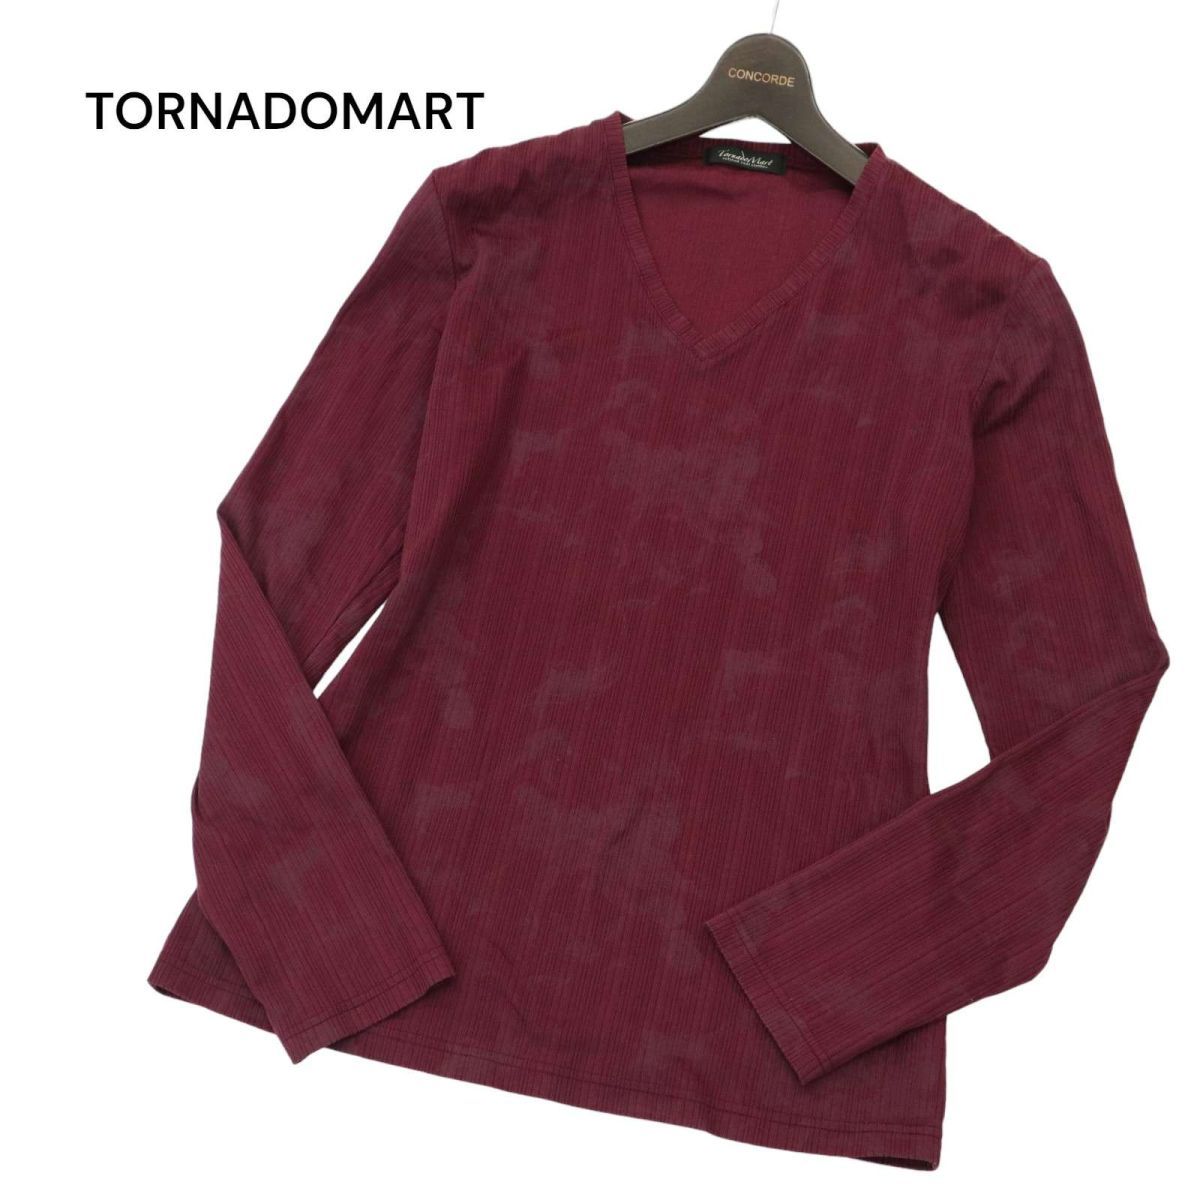 TORNADOMART Tornado Mart smo- cracker принт * длинный рукав V шея cut and sewn long футболка Sz.L мужской сделано в Японии C4T01022_2#F